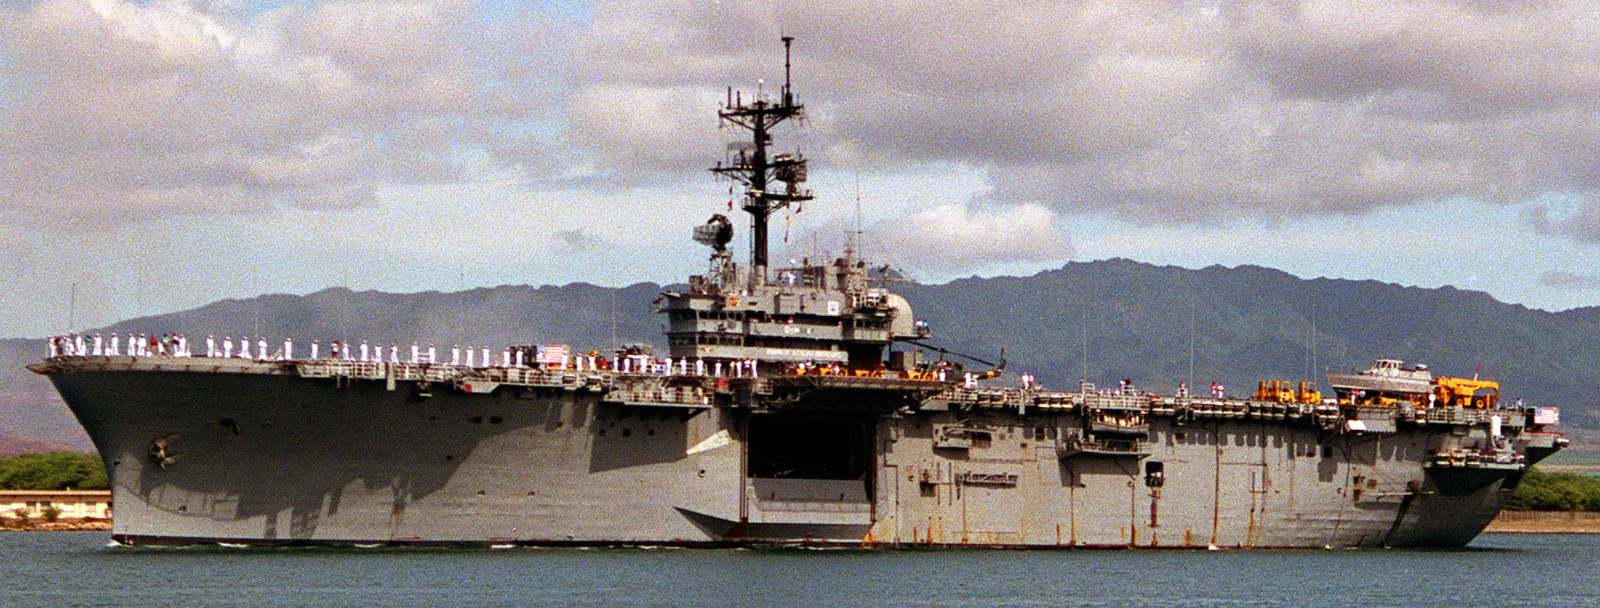 lph-10 uss tripoli iwo jima class amphibious assault ship landing platform helicopter us navy 25 pearl harbor hawaii desert storm